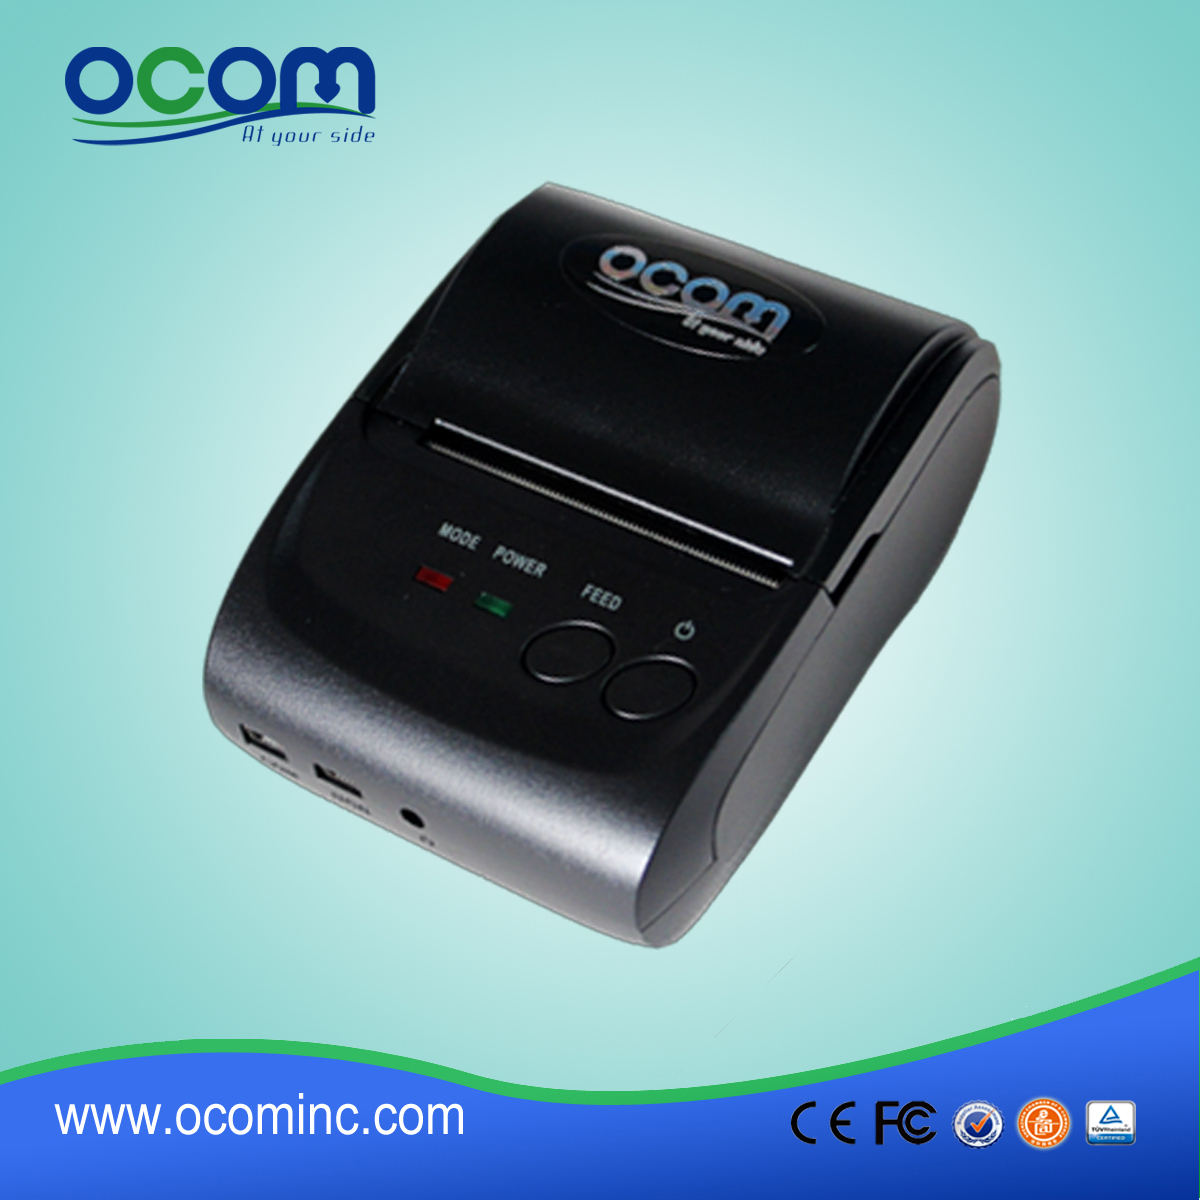 OCPP-M05: 58mm Bluetooth imprimante thermique portable avec SDK